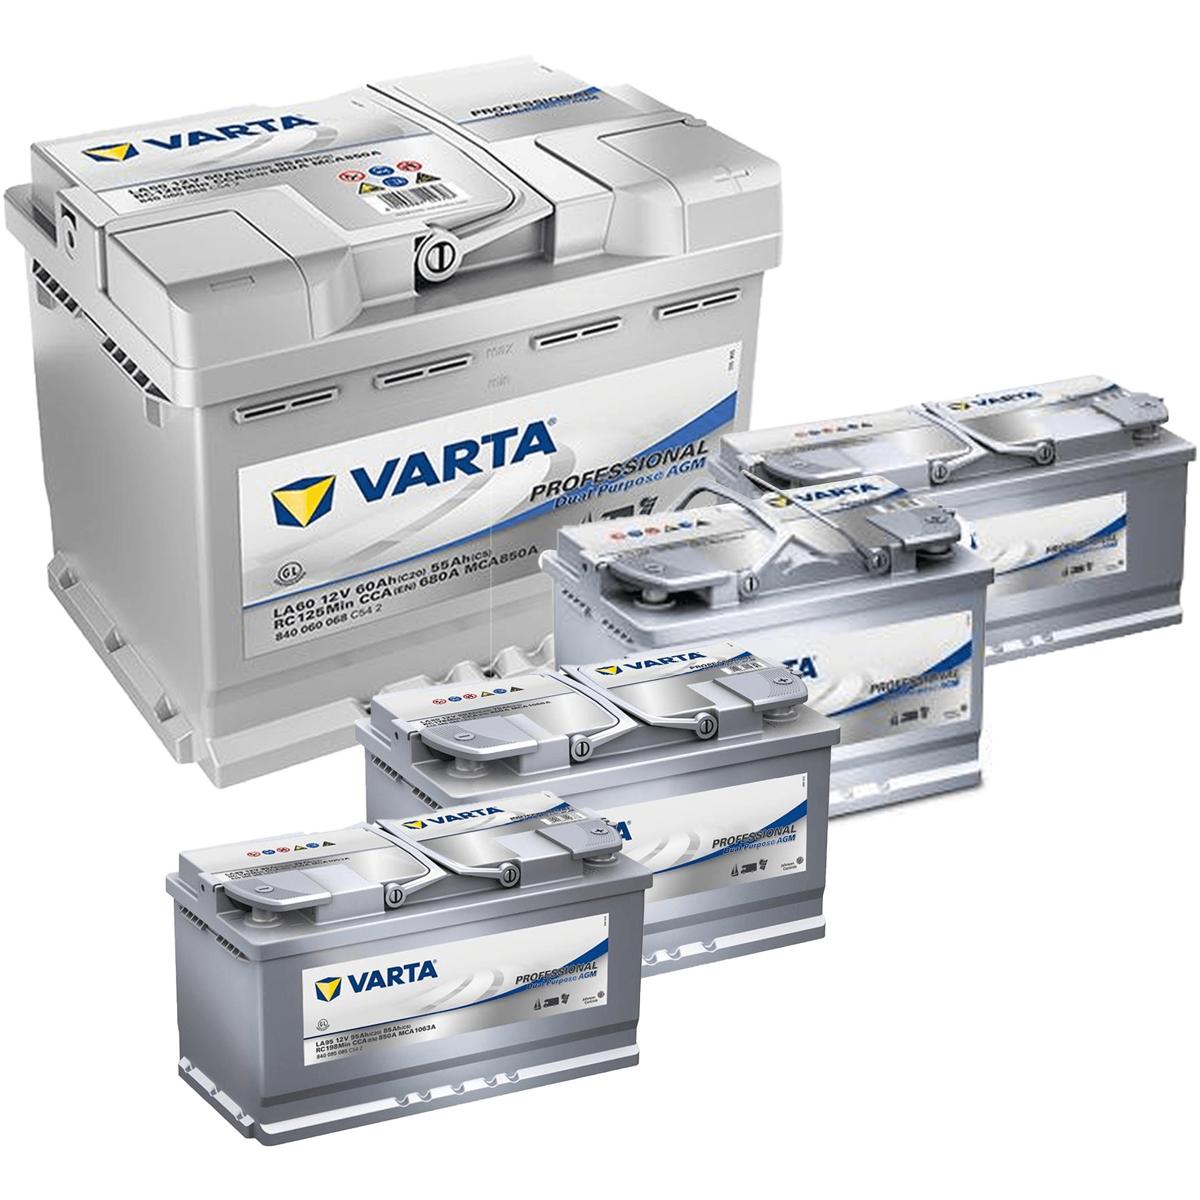 Varta LA95 Professional DP AGM Batterie 12V 95Ah 850A 840095085, AGM  Batterien, Akkus & Batterien